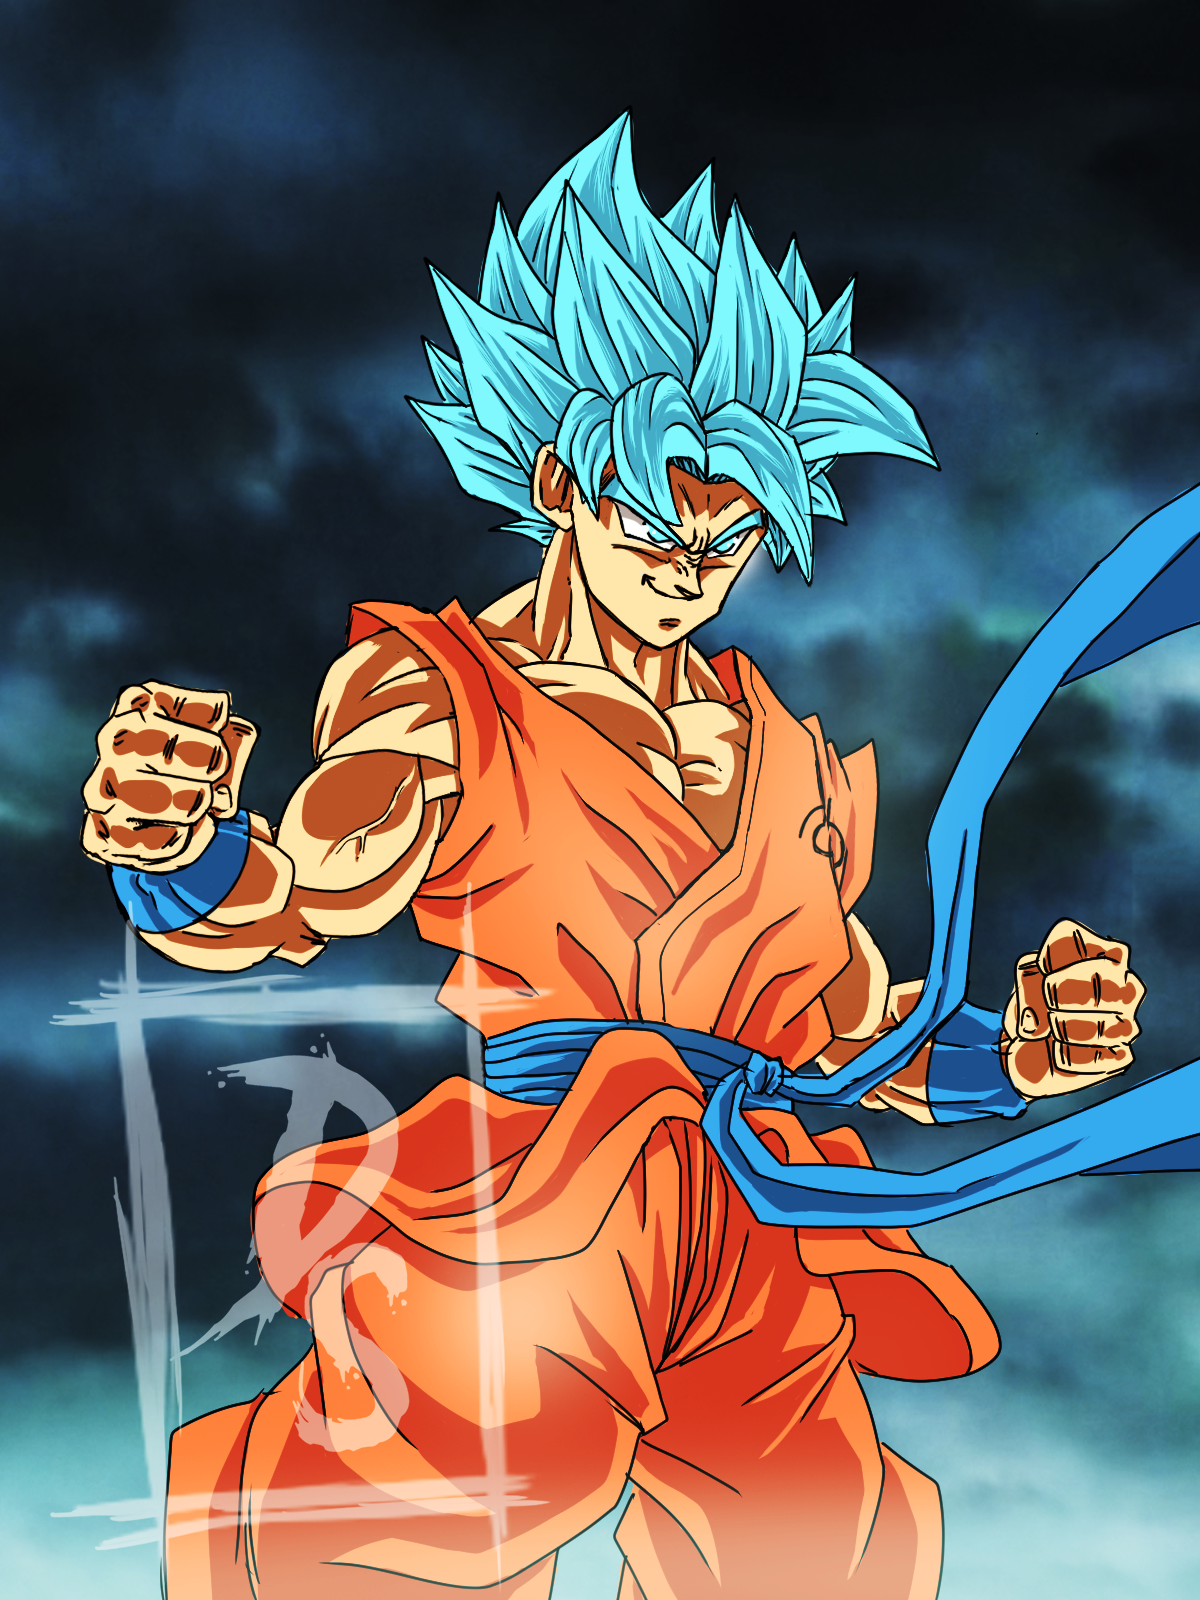 Goku ssj Blue full power!! (Version manga) by zala77s on DeviantArt